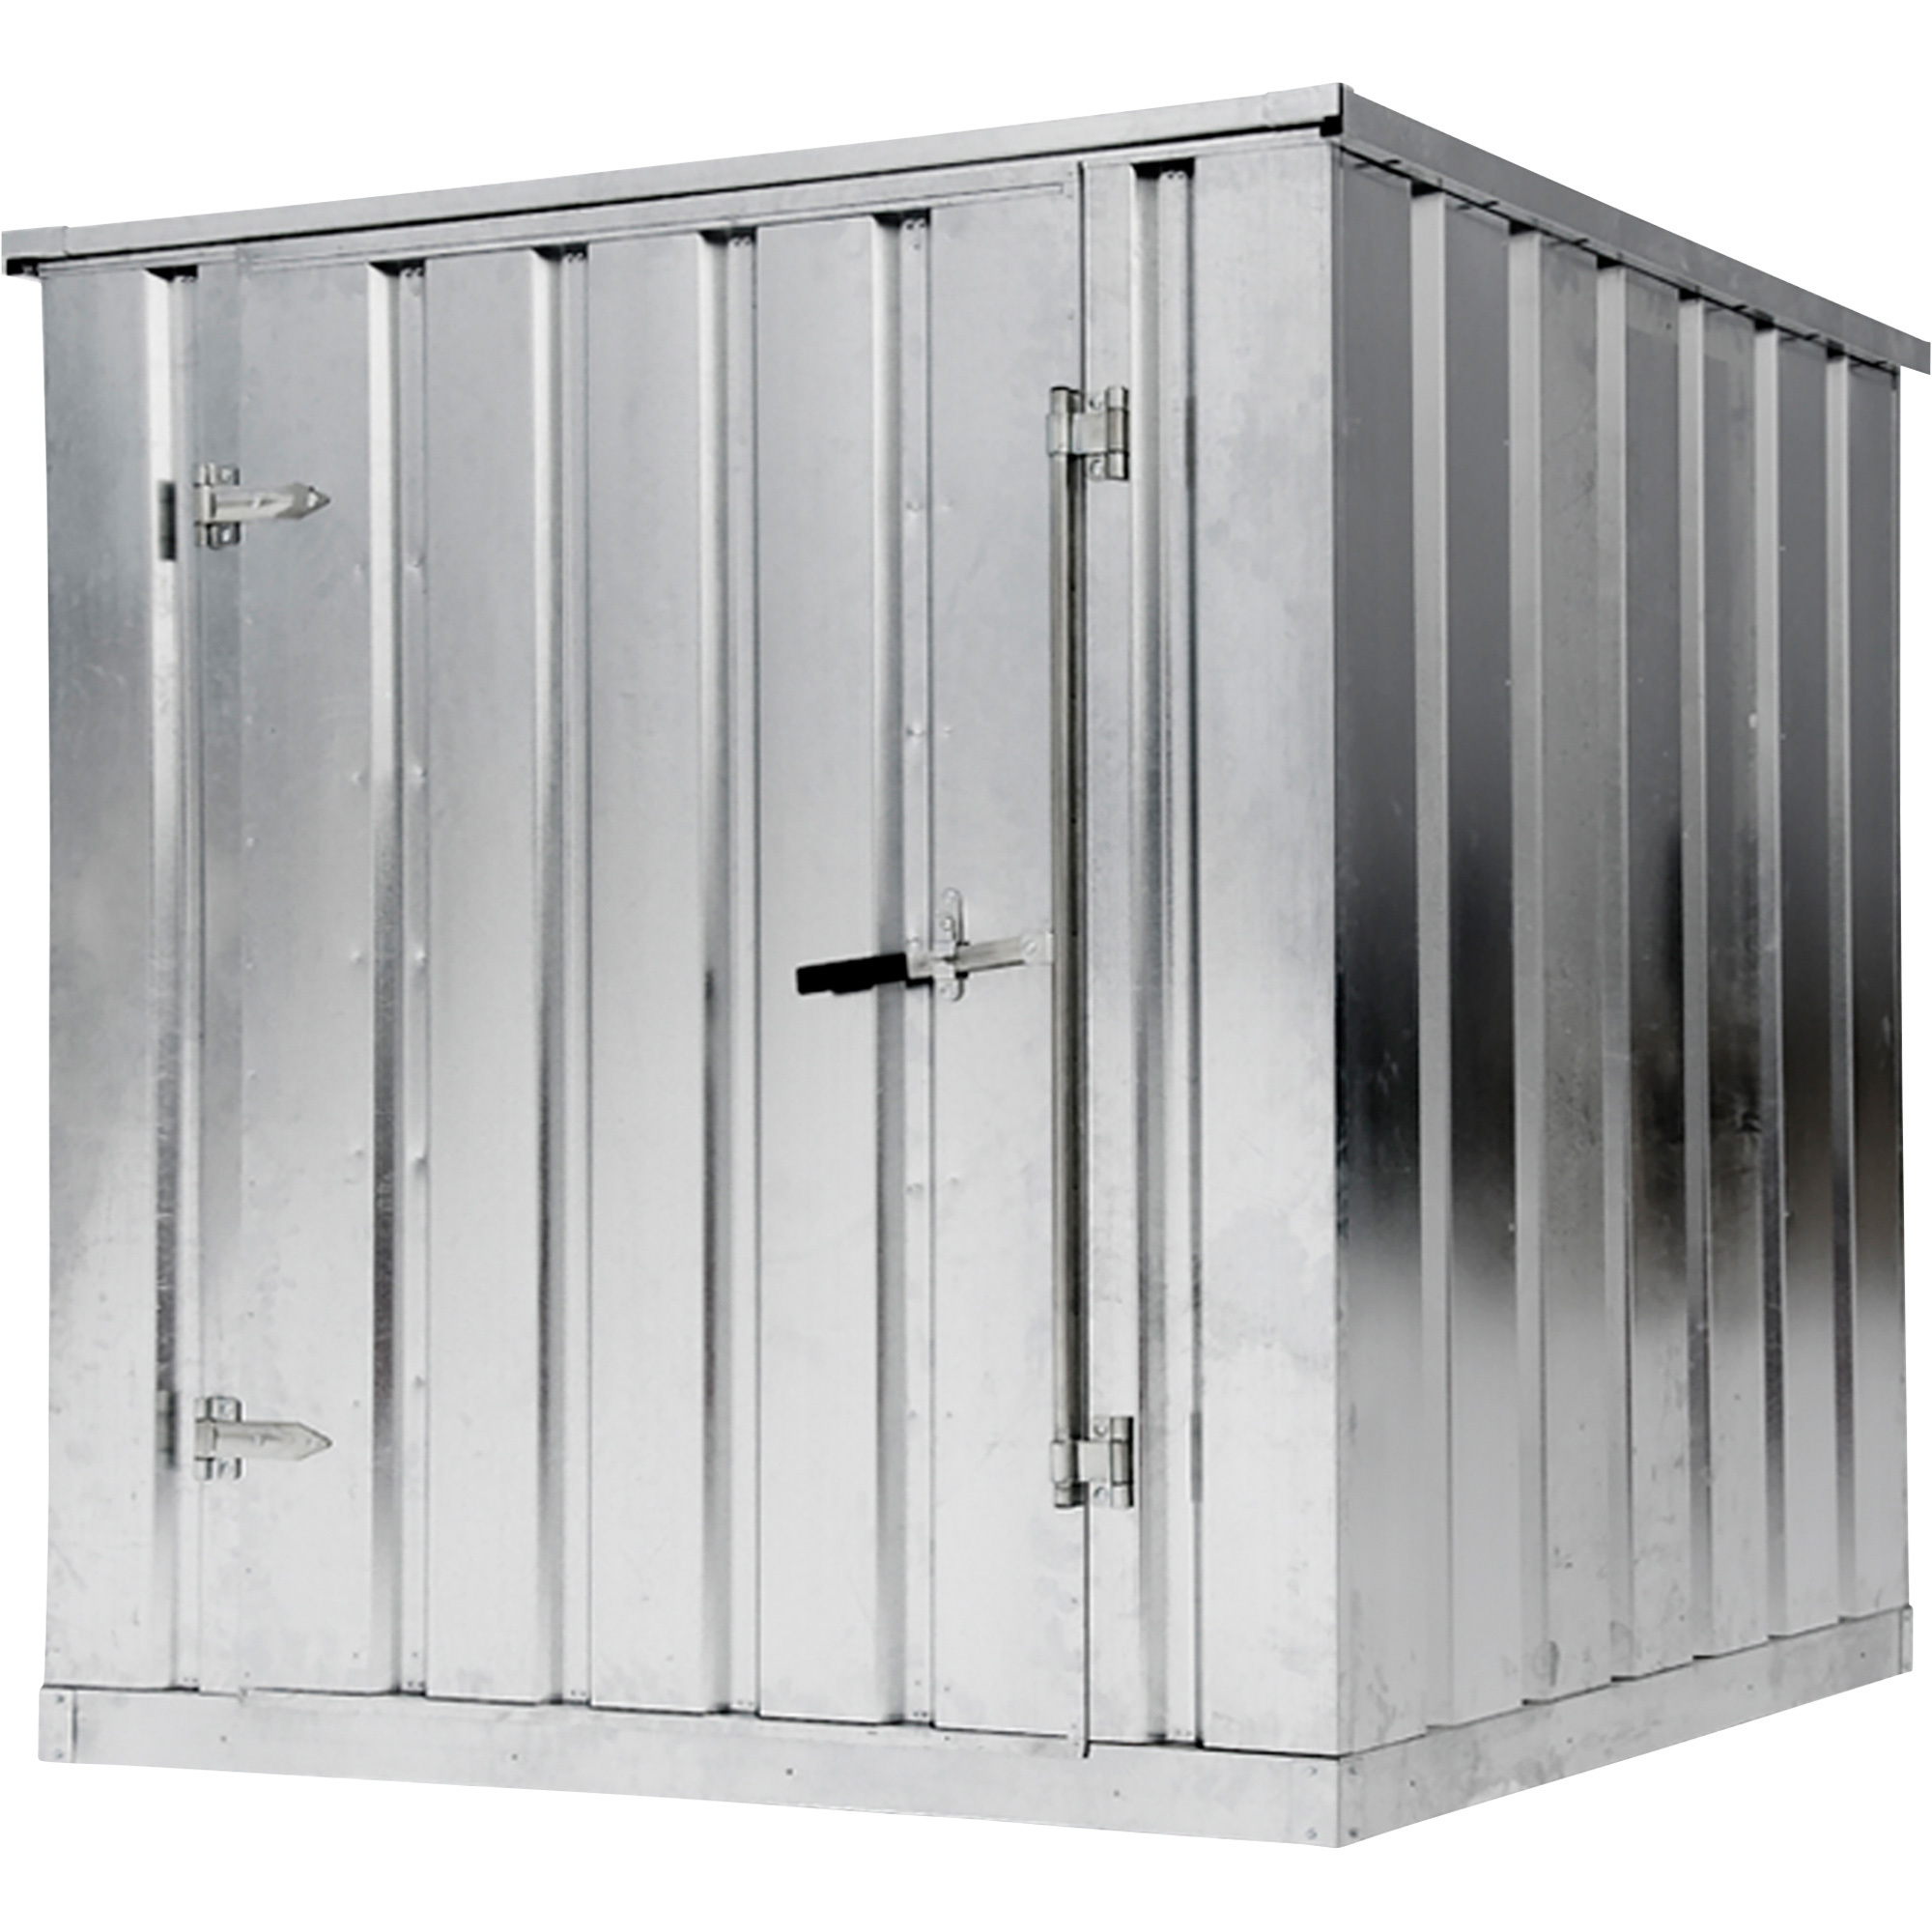 West Galvanized Storage Building Container Kit â 2,000-Lb. Capacity, 275 Cu. Ft., Model Store83